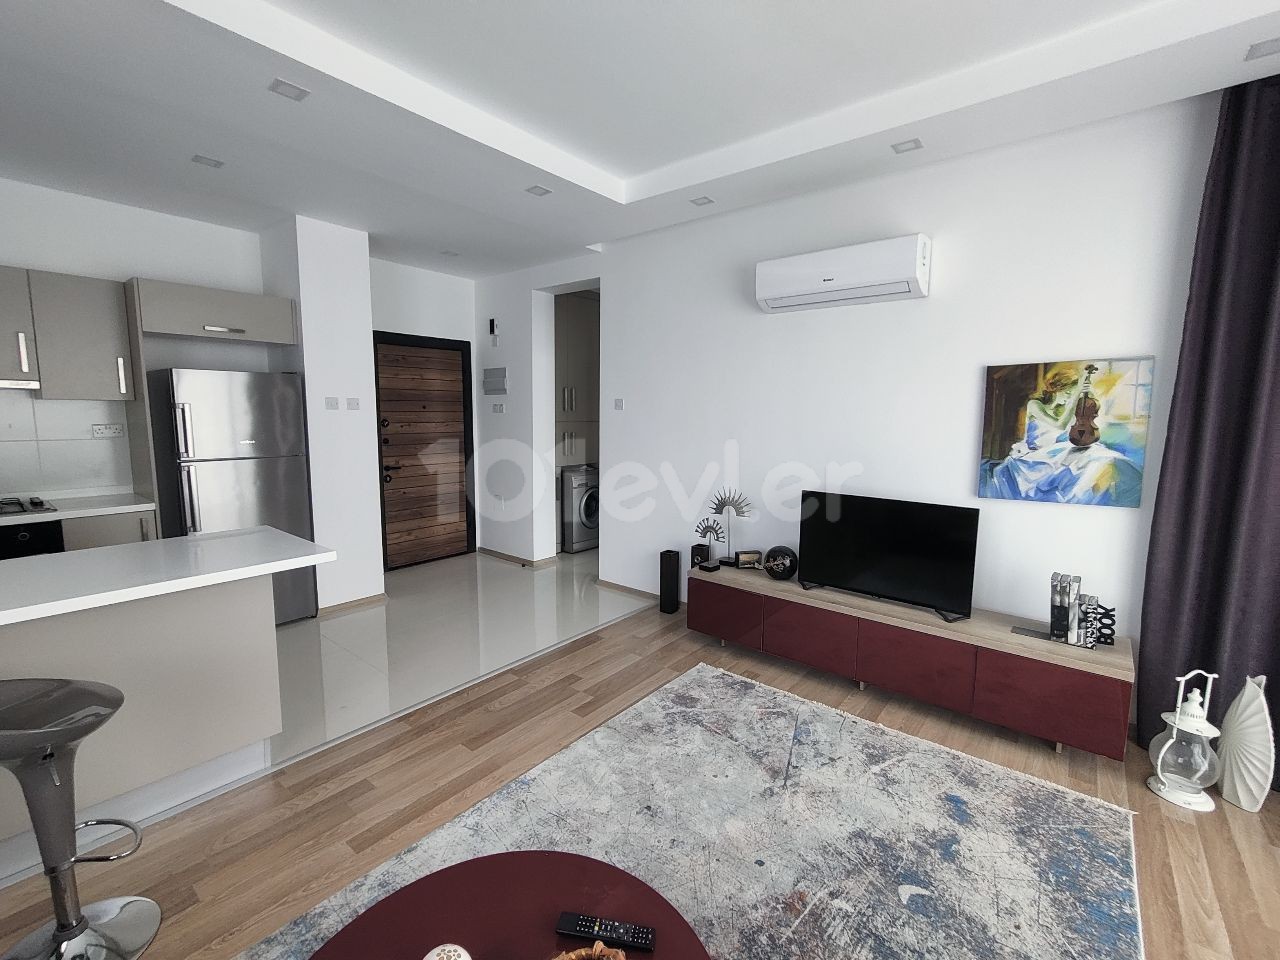 Güzelyurt Kalkanlı 1+1 flat for sale from the site's real estate agent